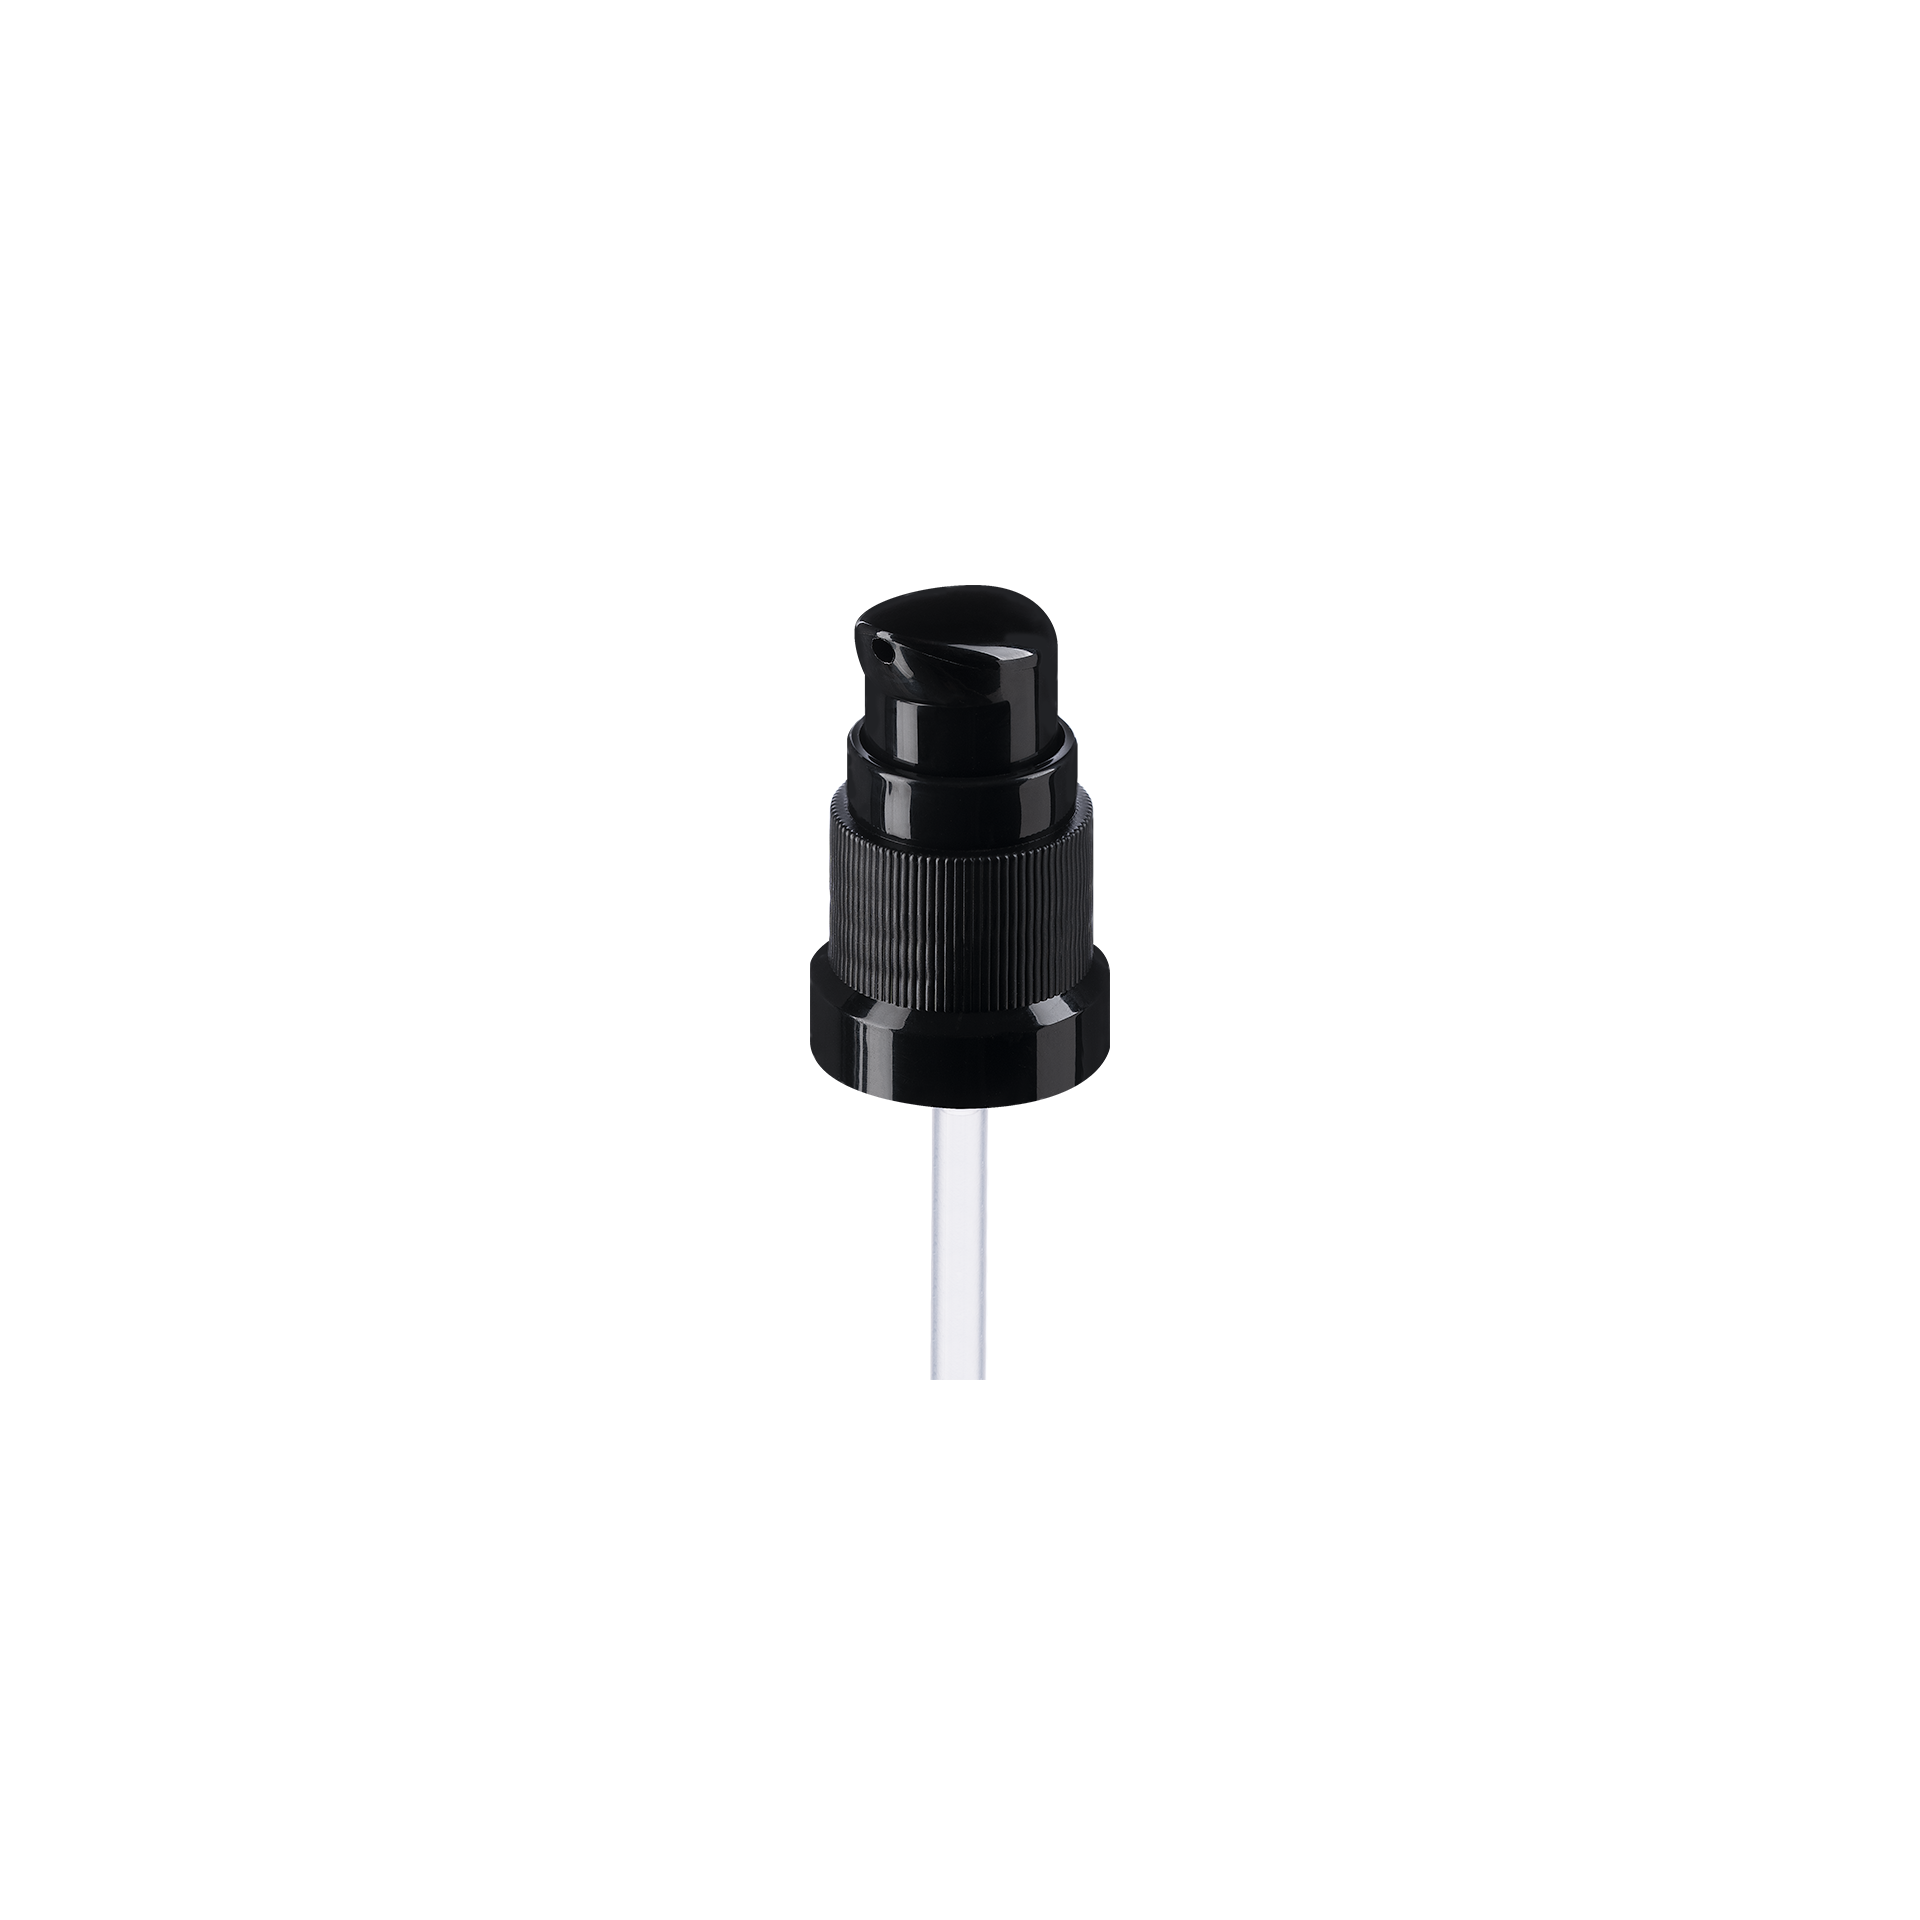 Lotion pump Metropolitan DIN18, PP, black, dose 0.15ml, black security clip (Ginger 60)